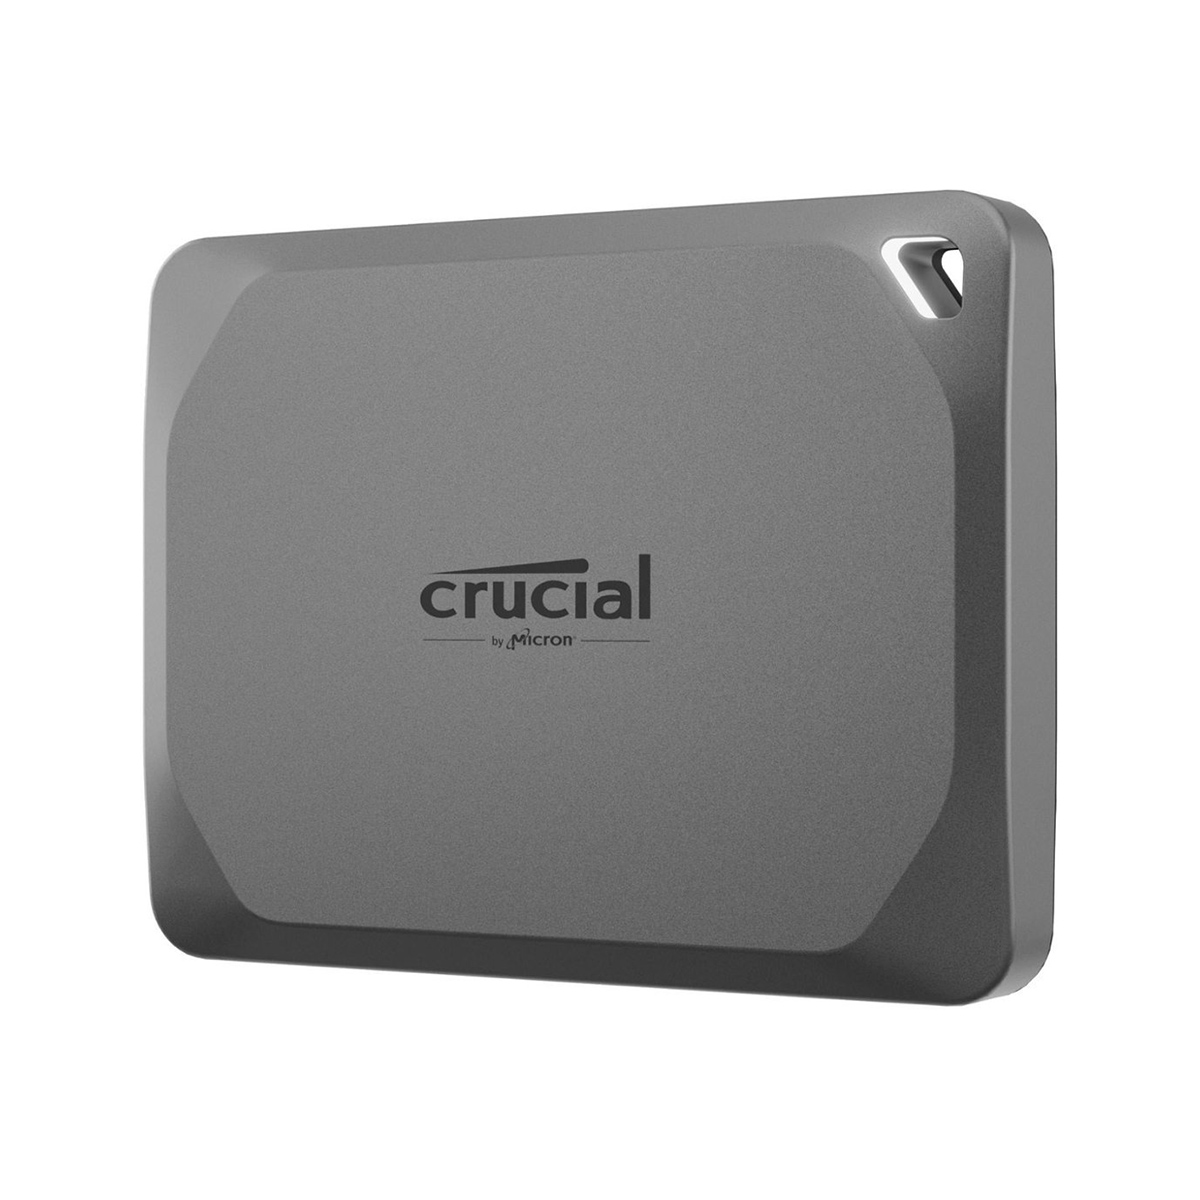 SSD Crucial X9 Pro